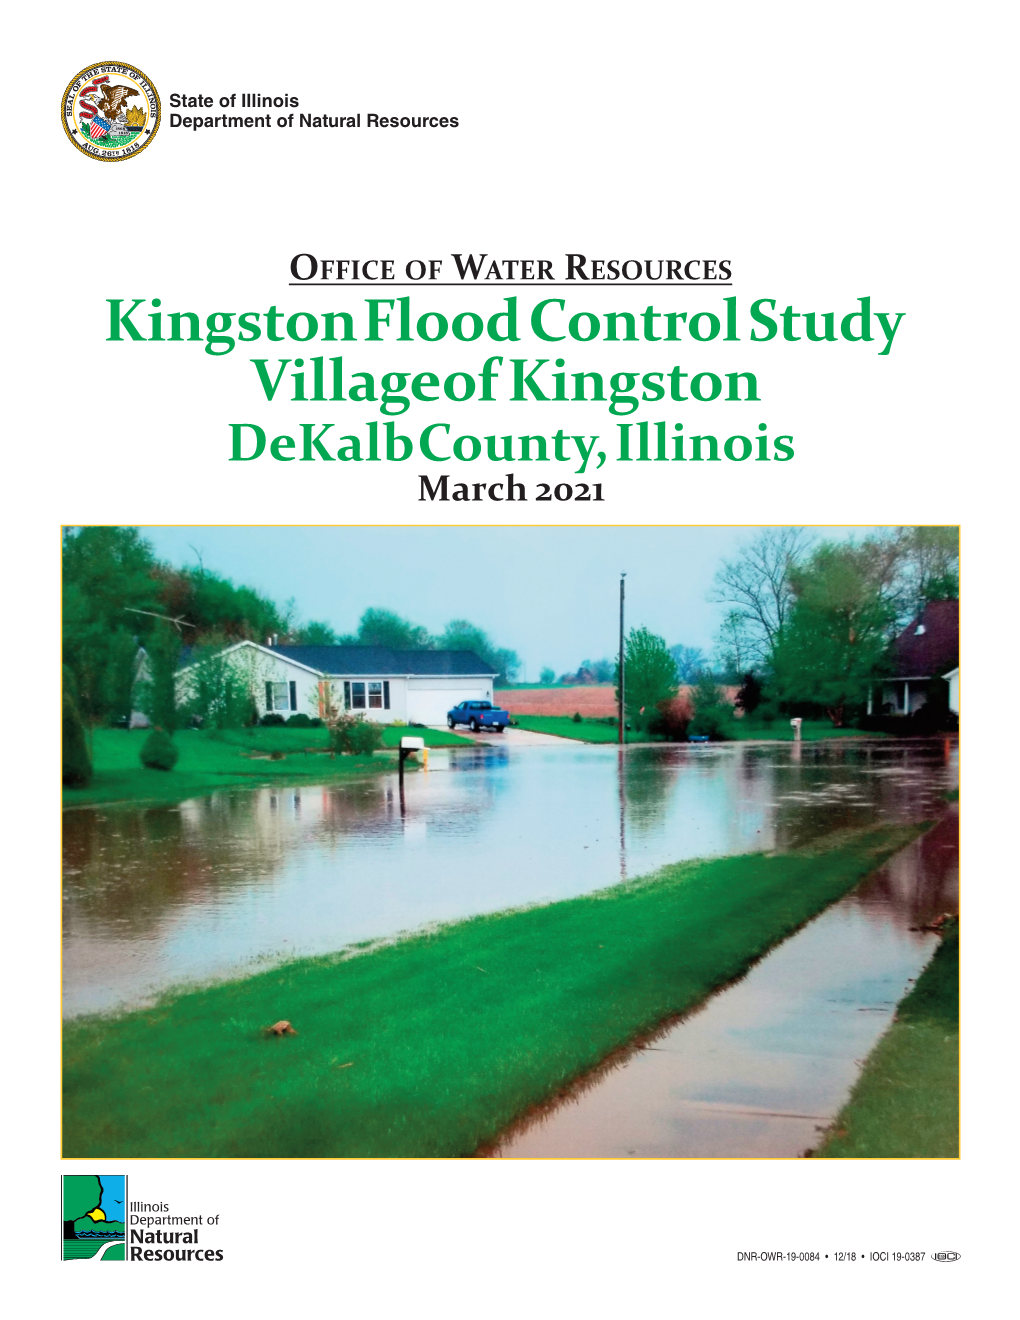 Kingston Flood Control Study March 2021